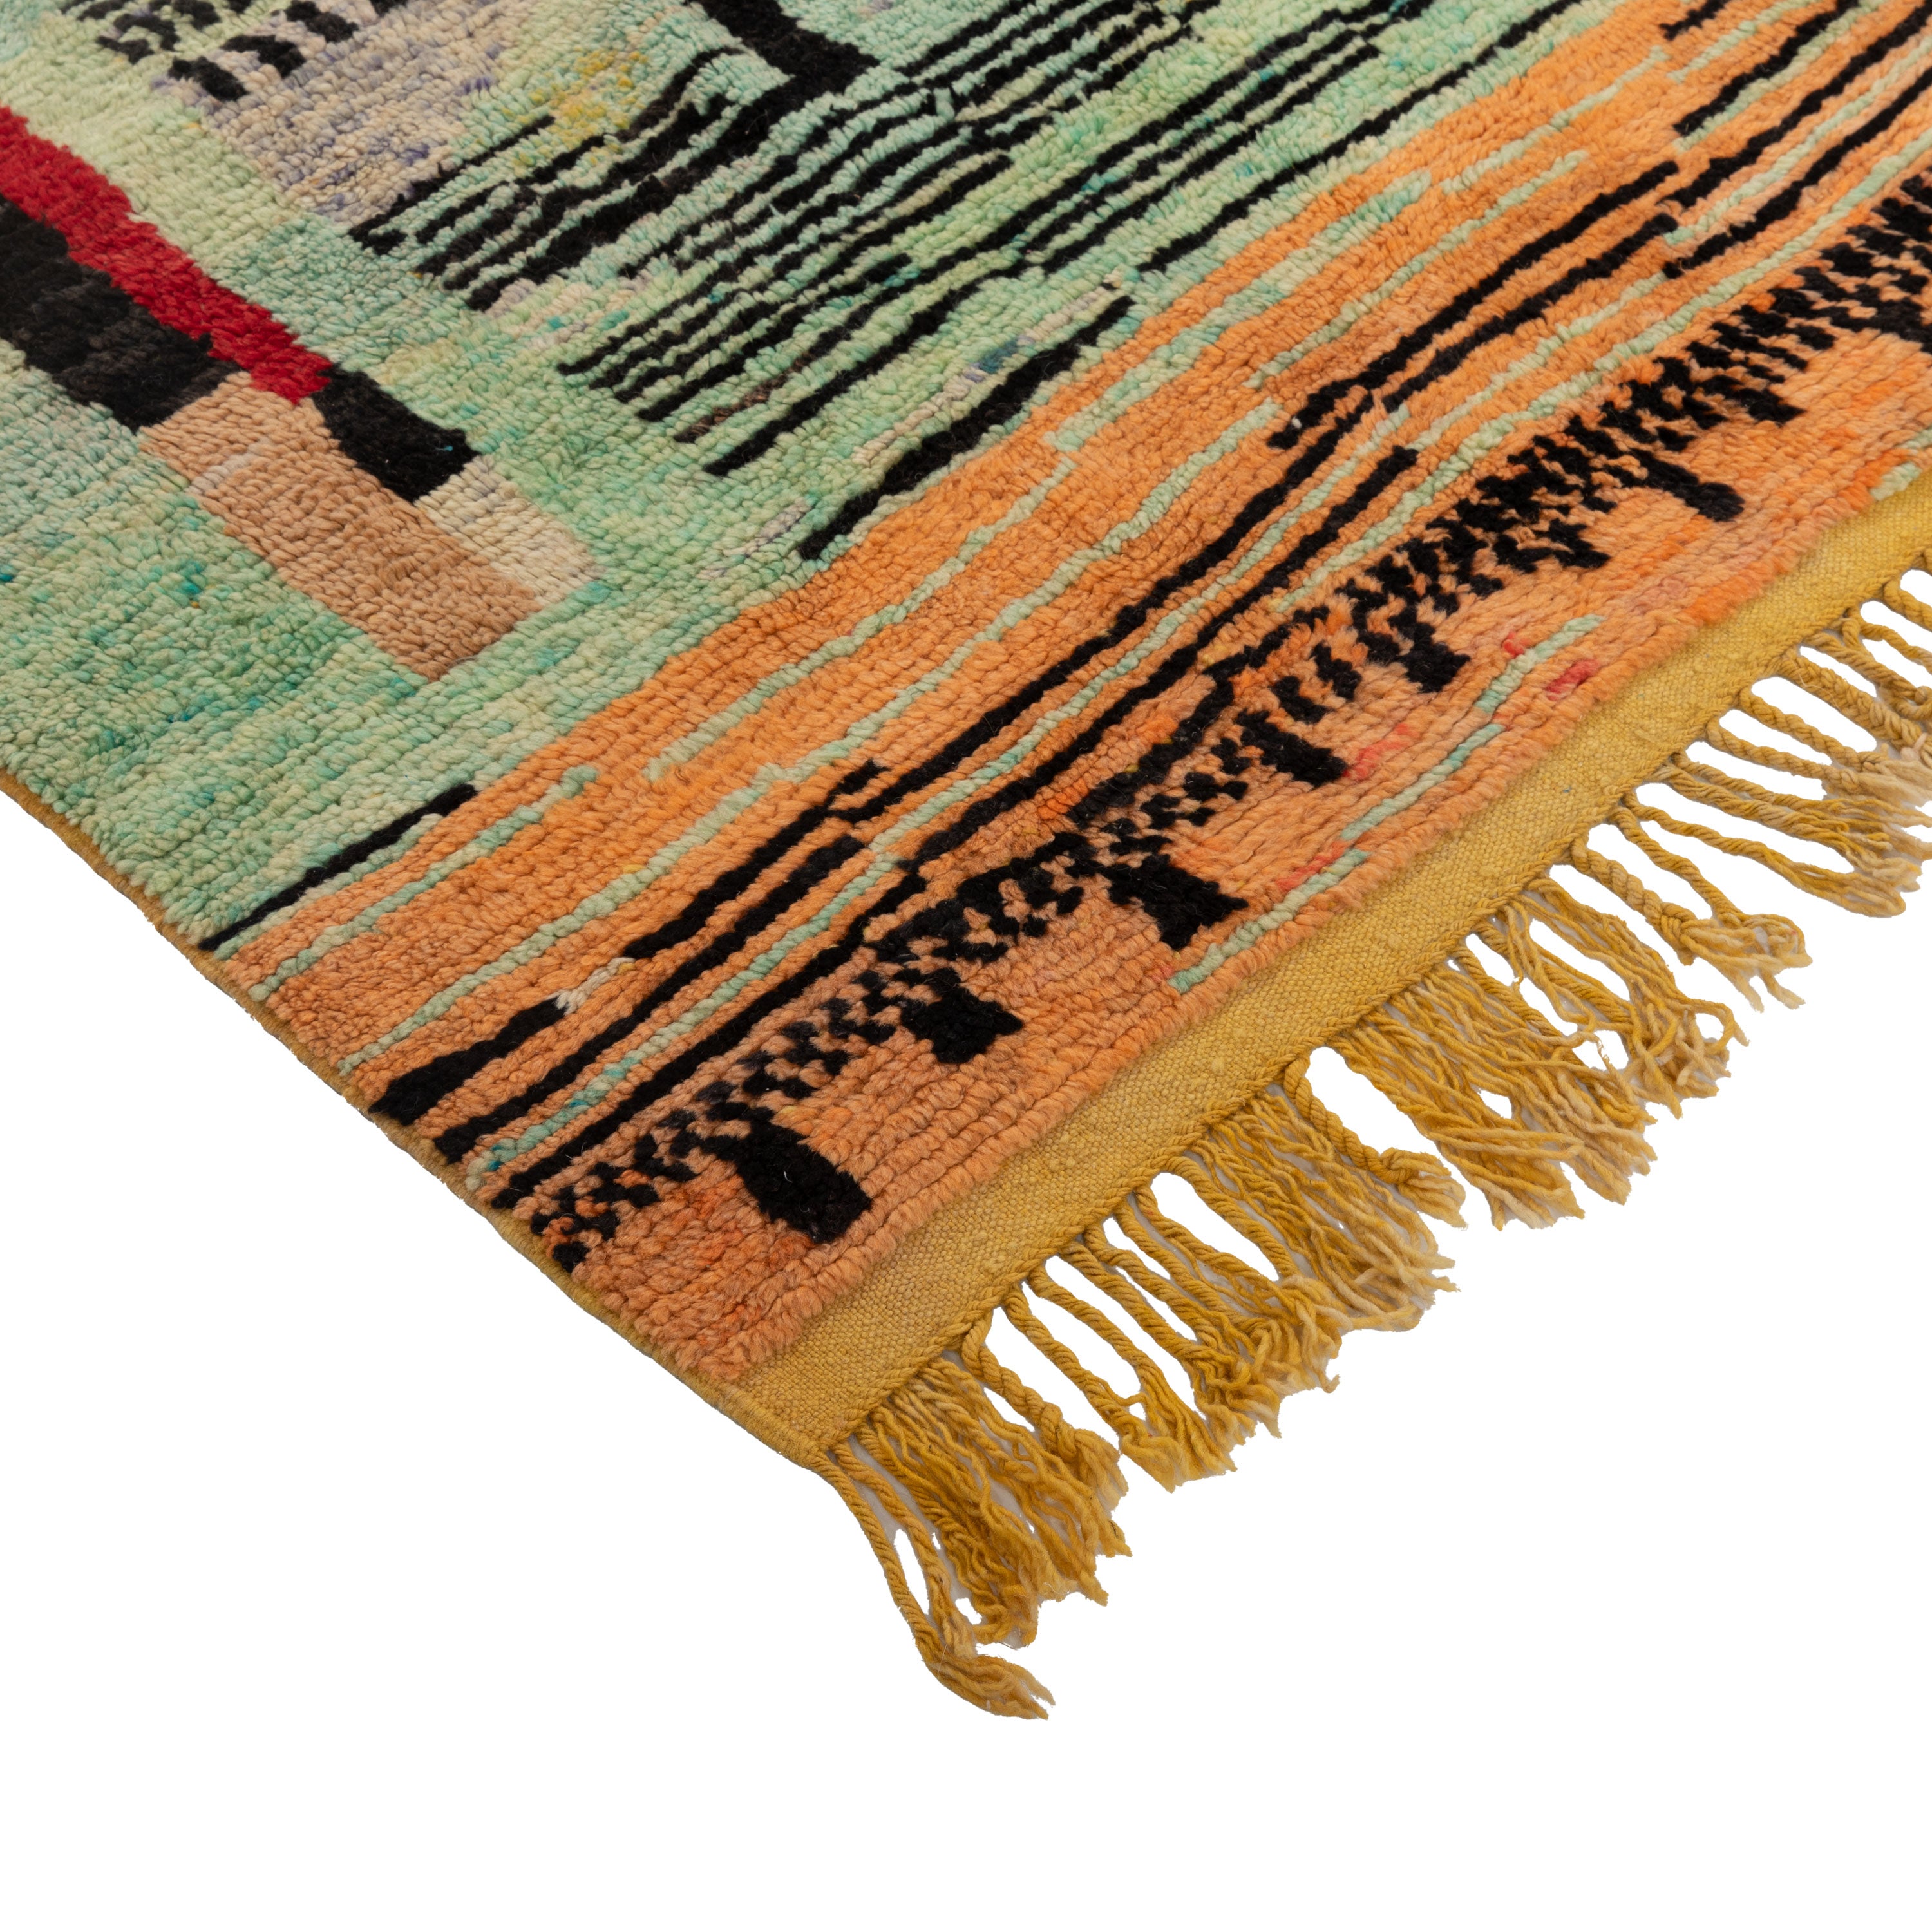 Multicolored Moroccan Berbere Wool Rug  - 4'9" x 6'3"